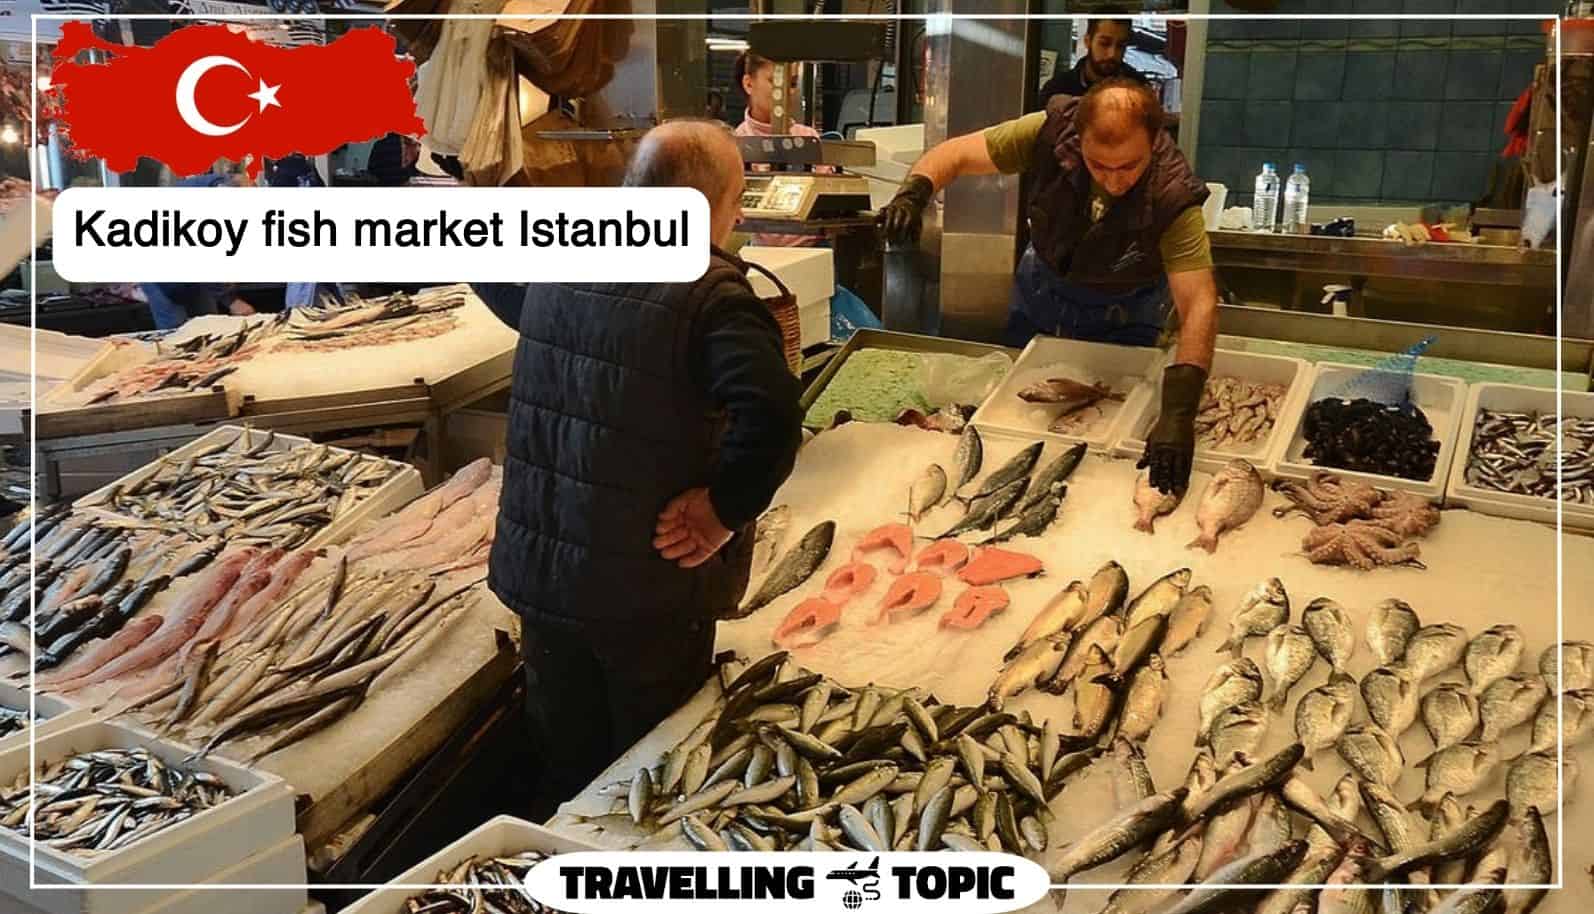 Kadikoy fish market Istanbul